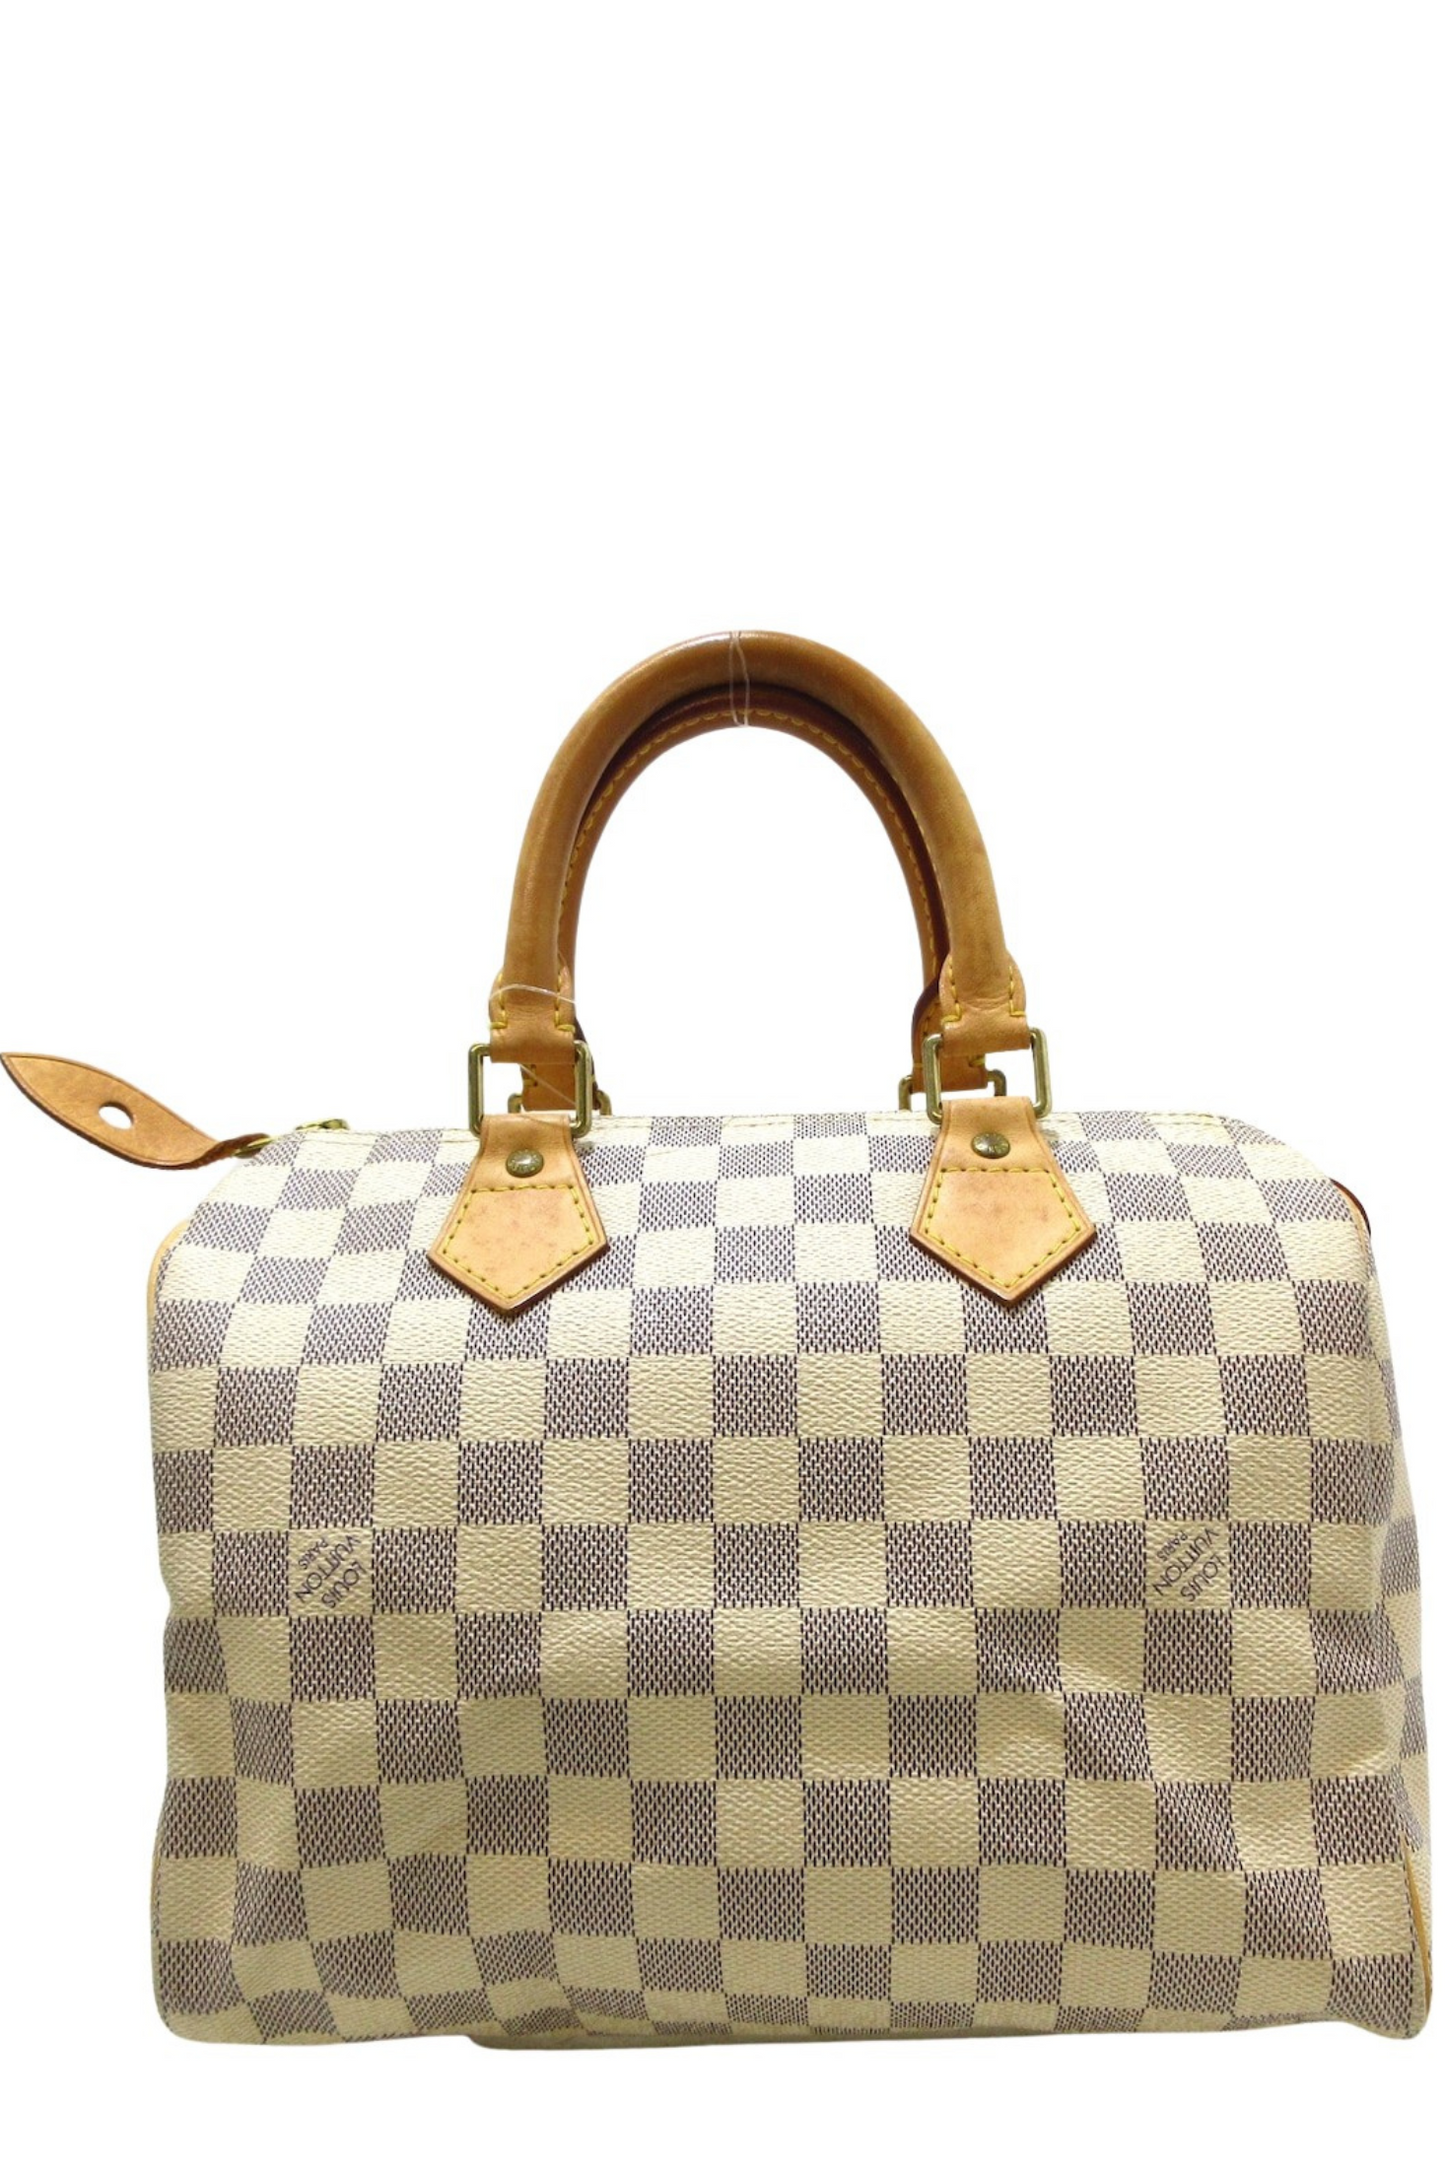 Louis Vuitton Damier Ebene Speedy 25 handbag